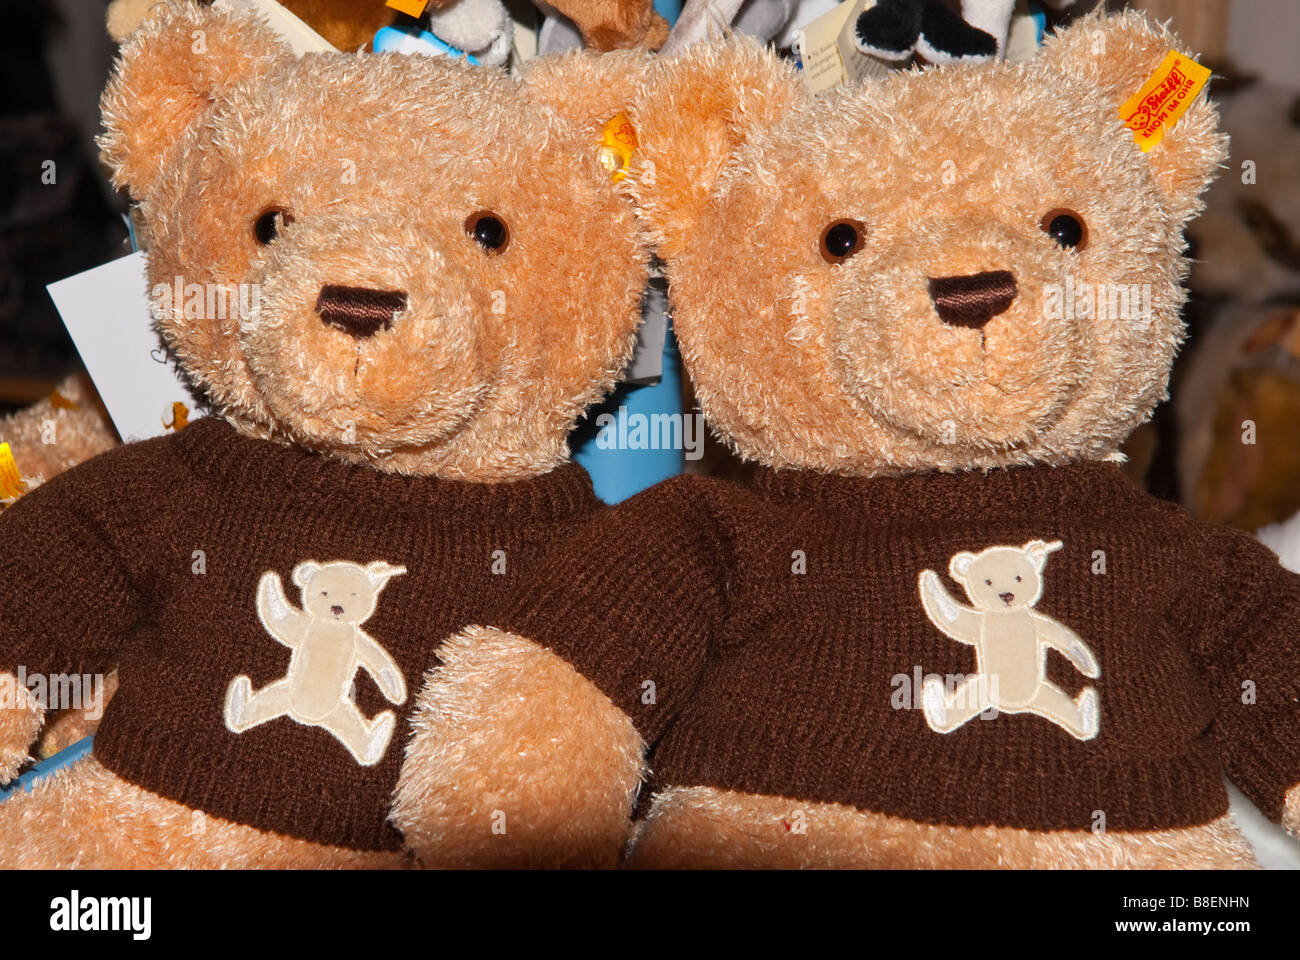 German Steiff Teddy Bear in Suitcase – Uli's Santa Fe